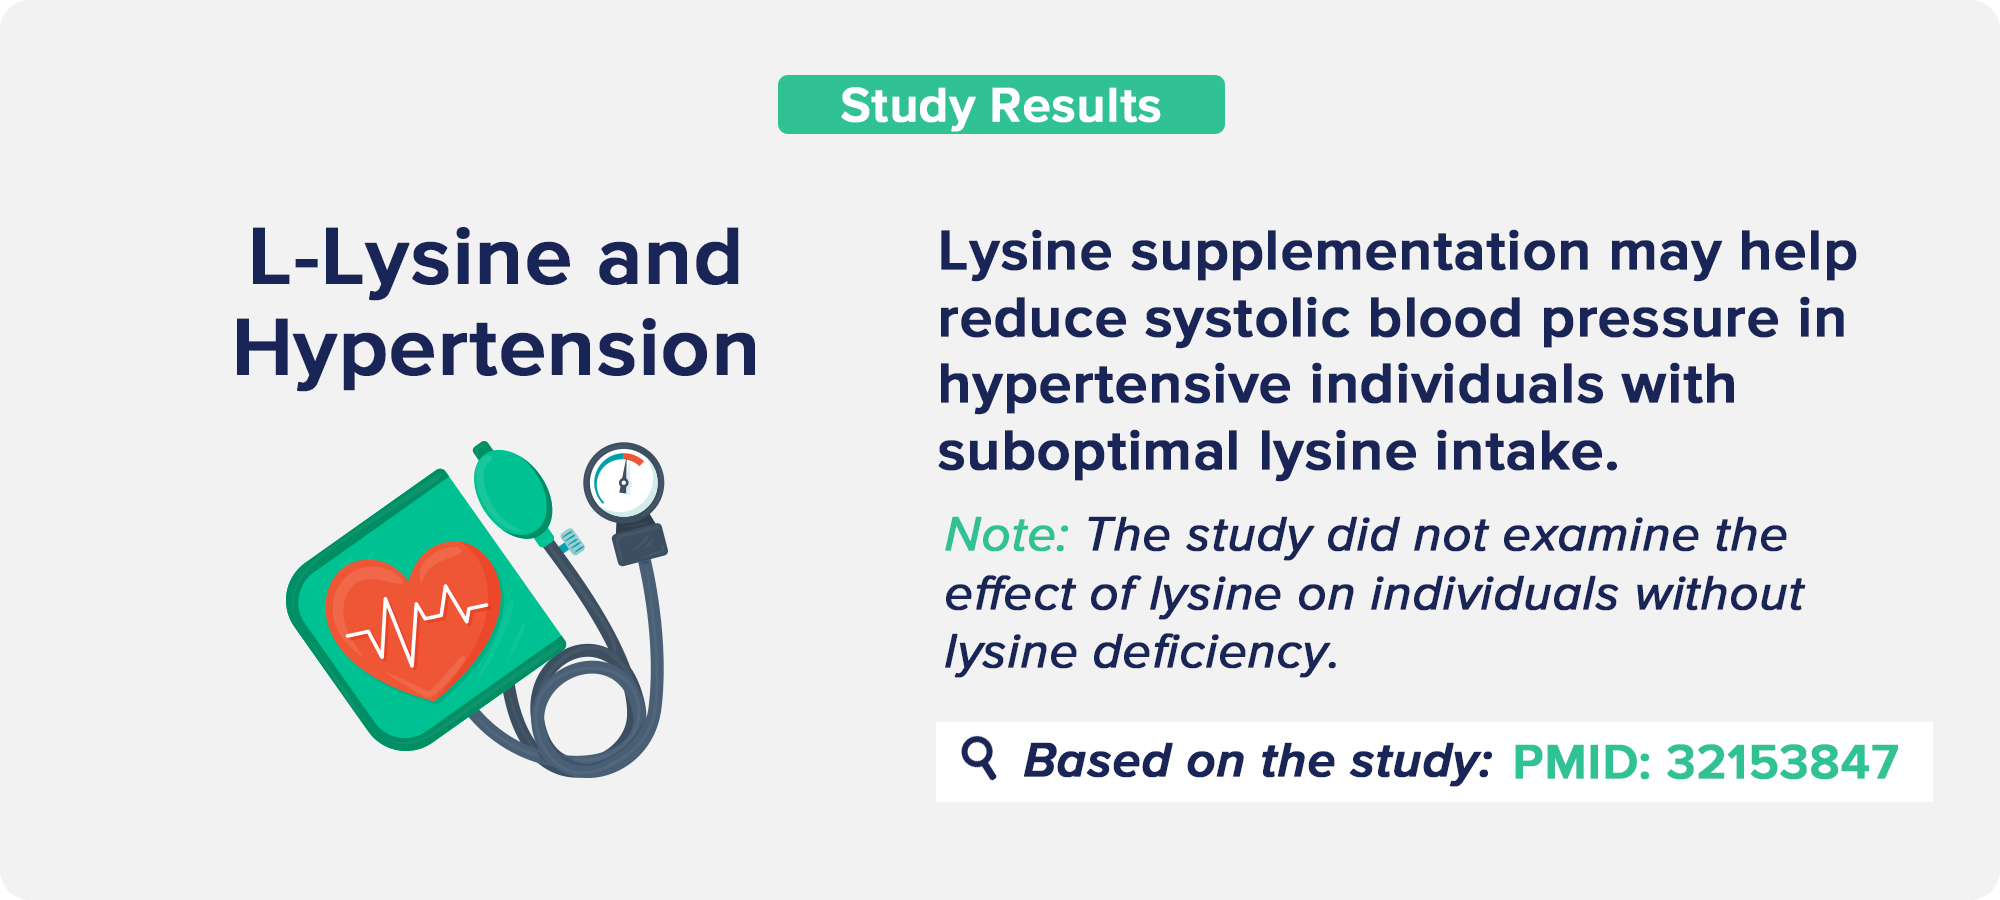 L-Lysine and Hypertension